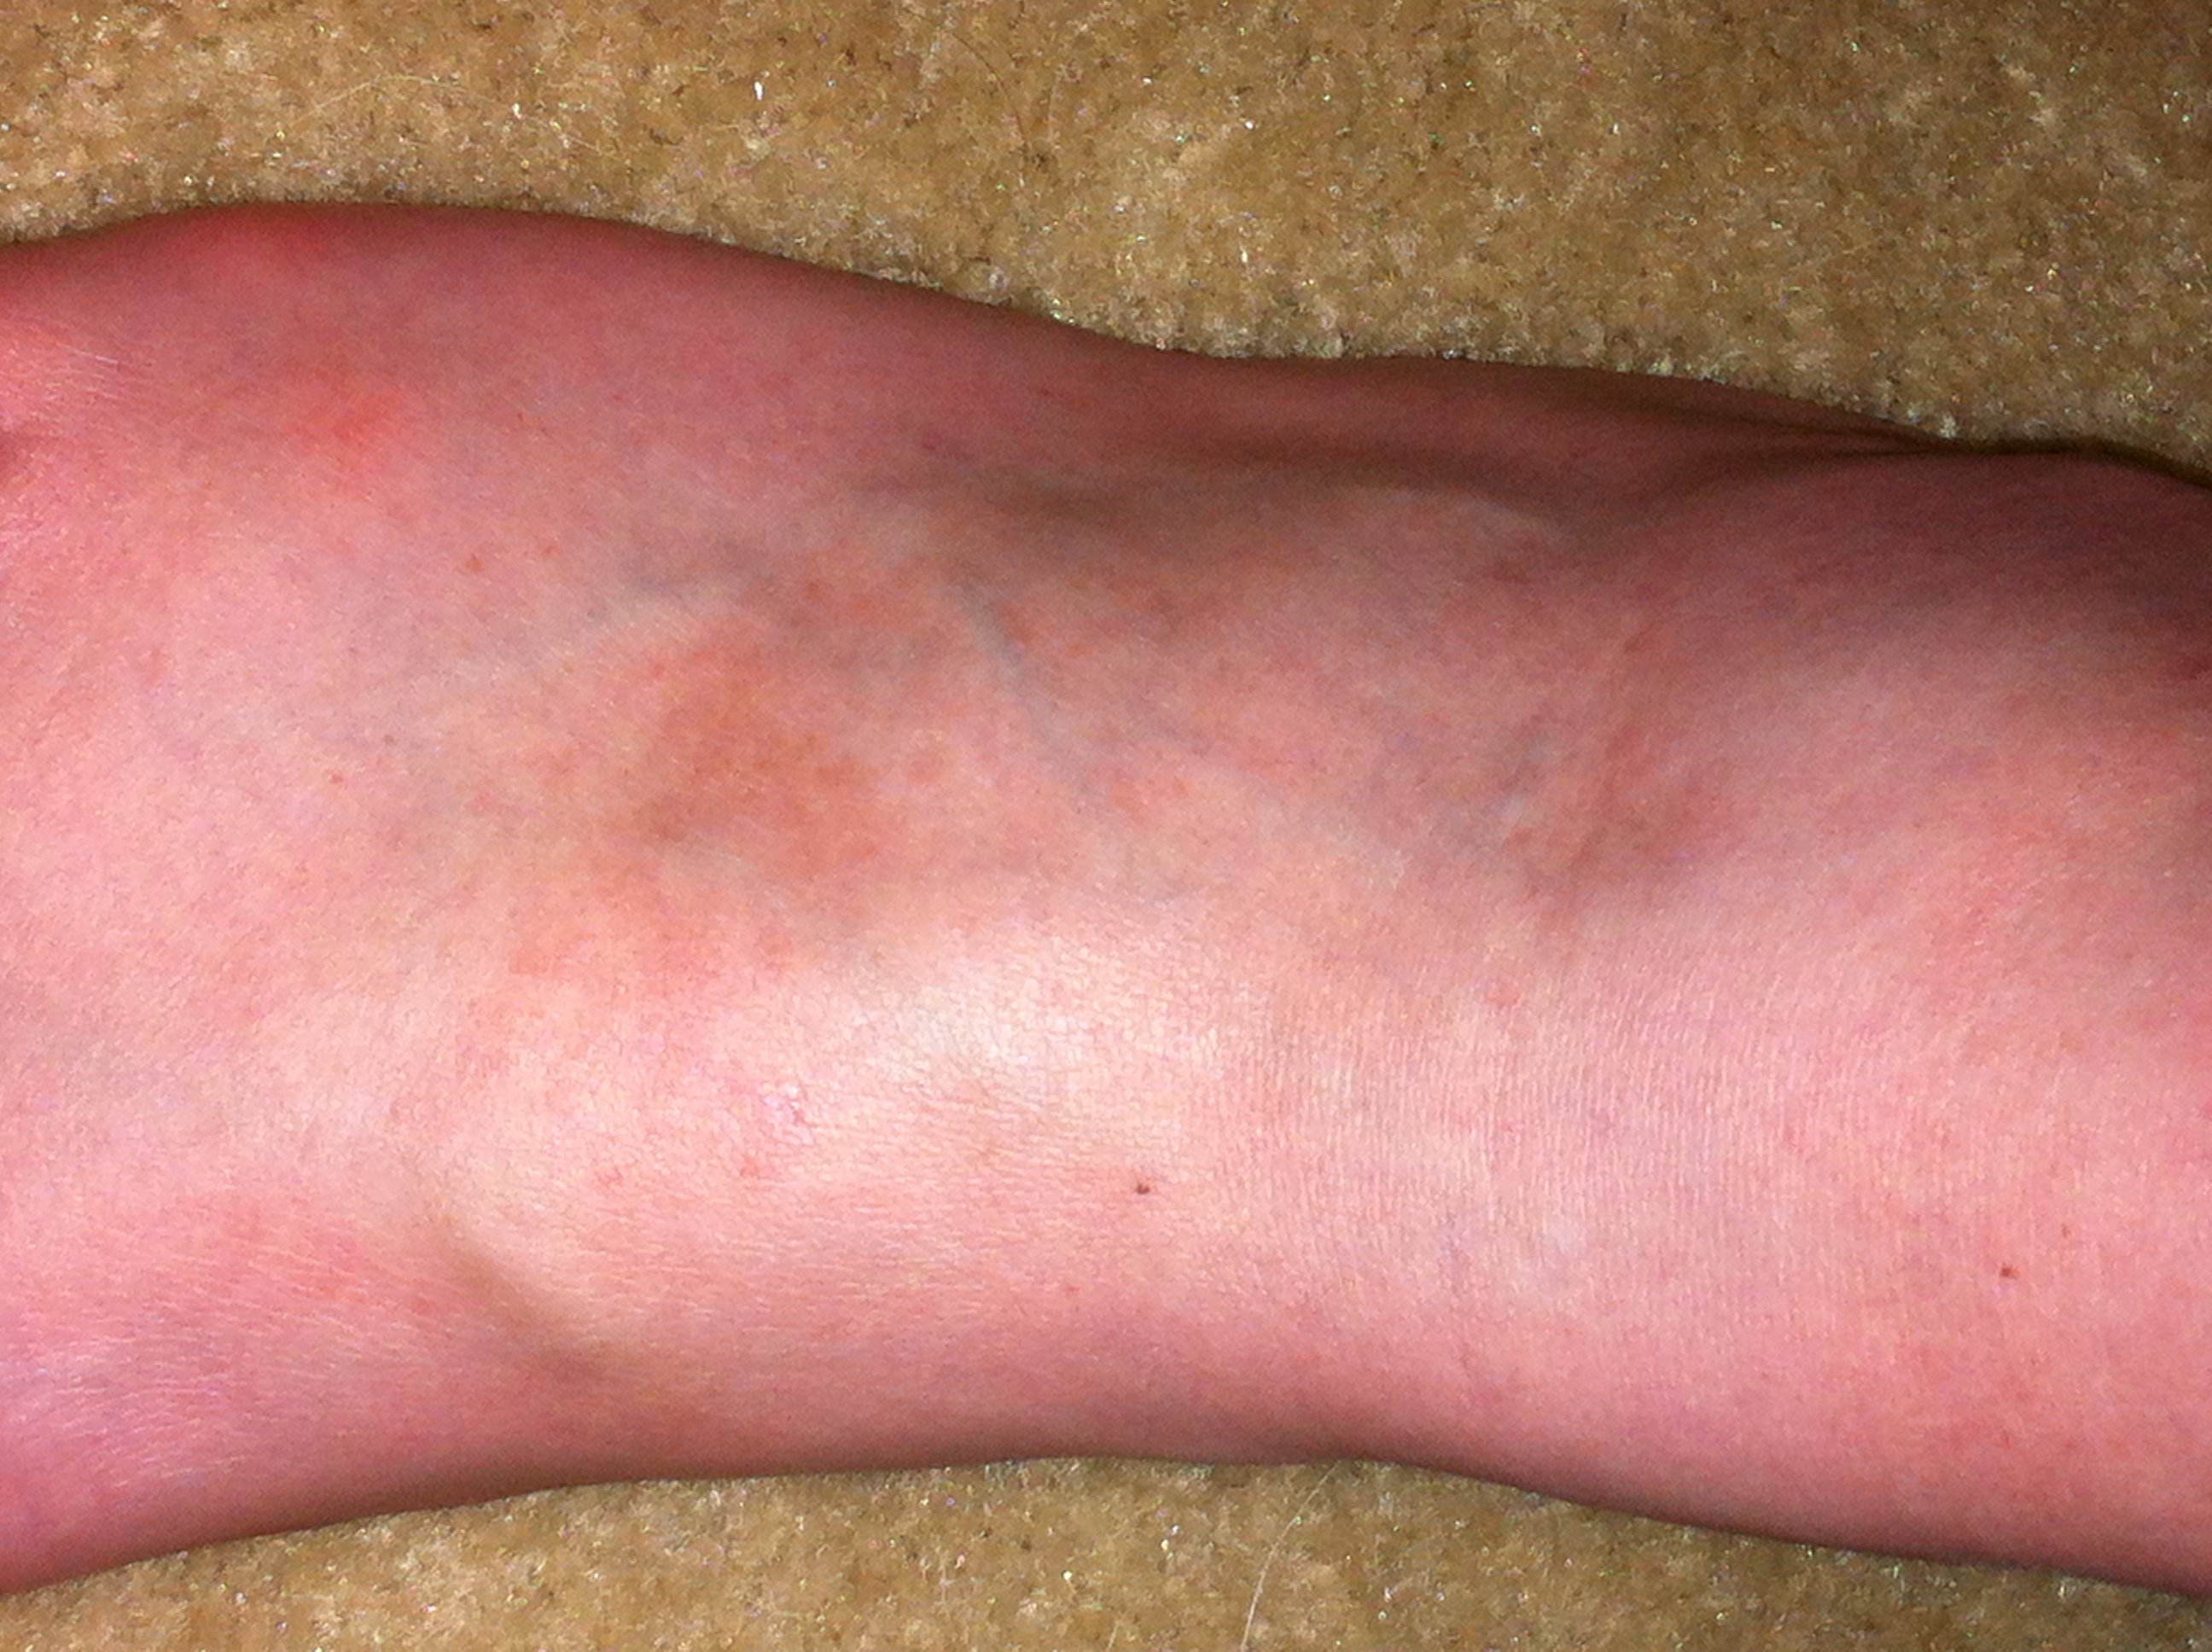 rashes on feet